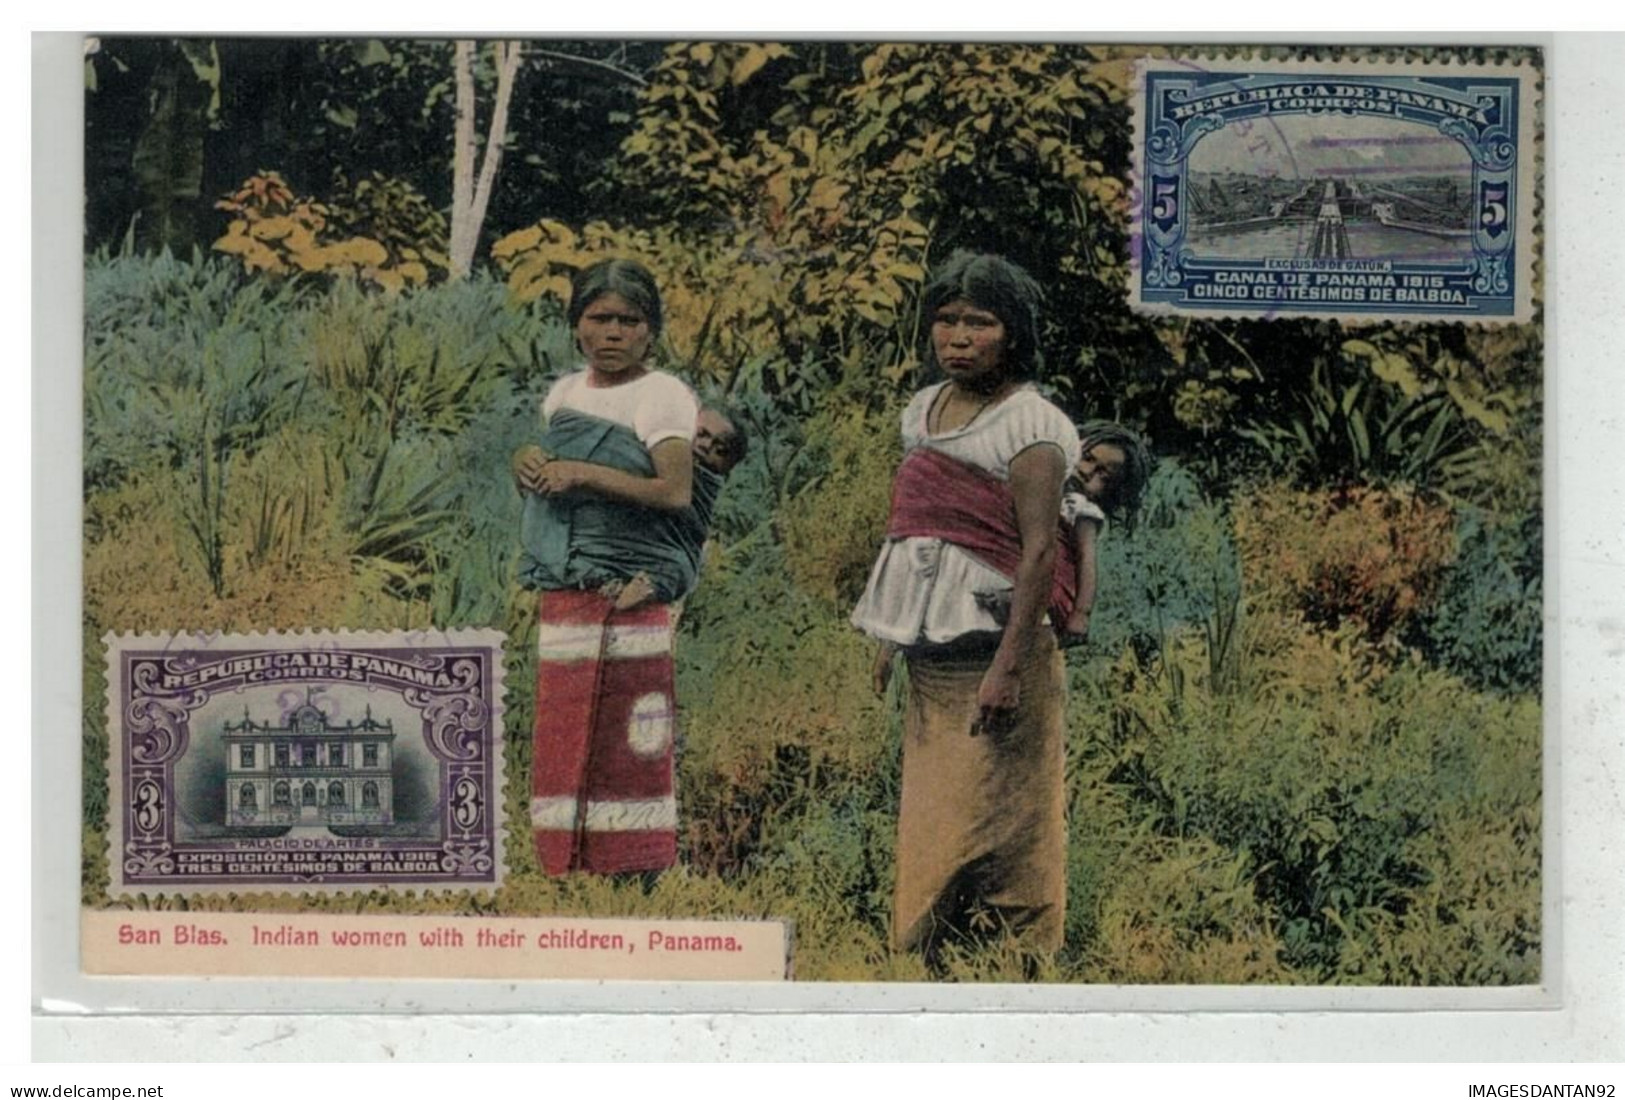 PANAMA #17616 SAN BLAS INDIAN WOMEN WITH THEIR CHILDREN - Panamá